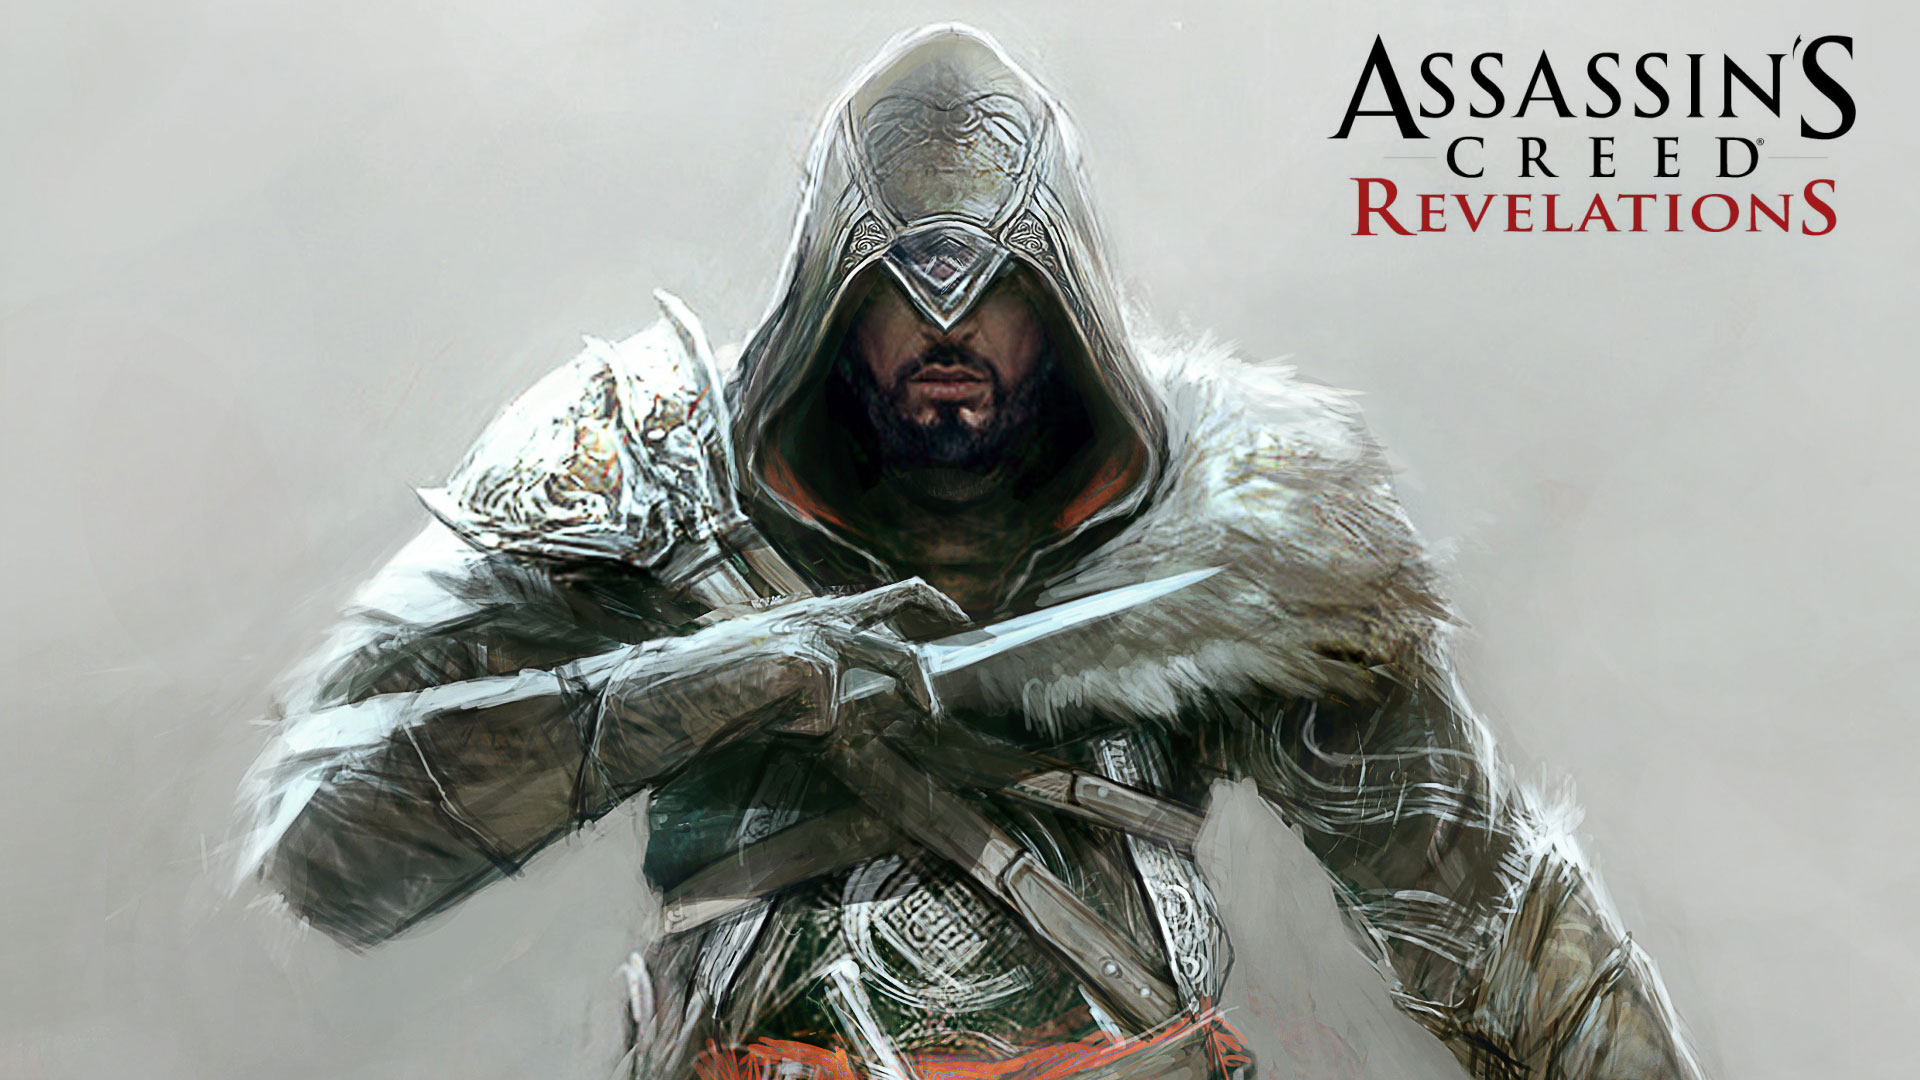 Adventure Game Assassins Creed 4 Revelations HD Wallpaper Image